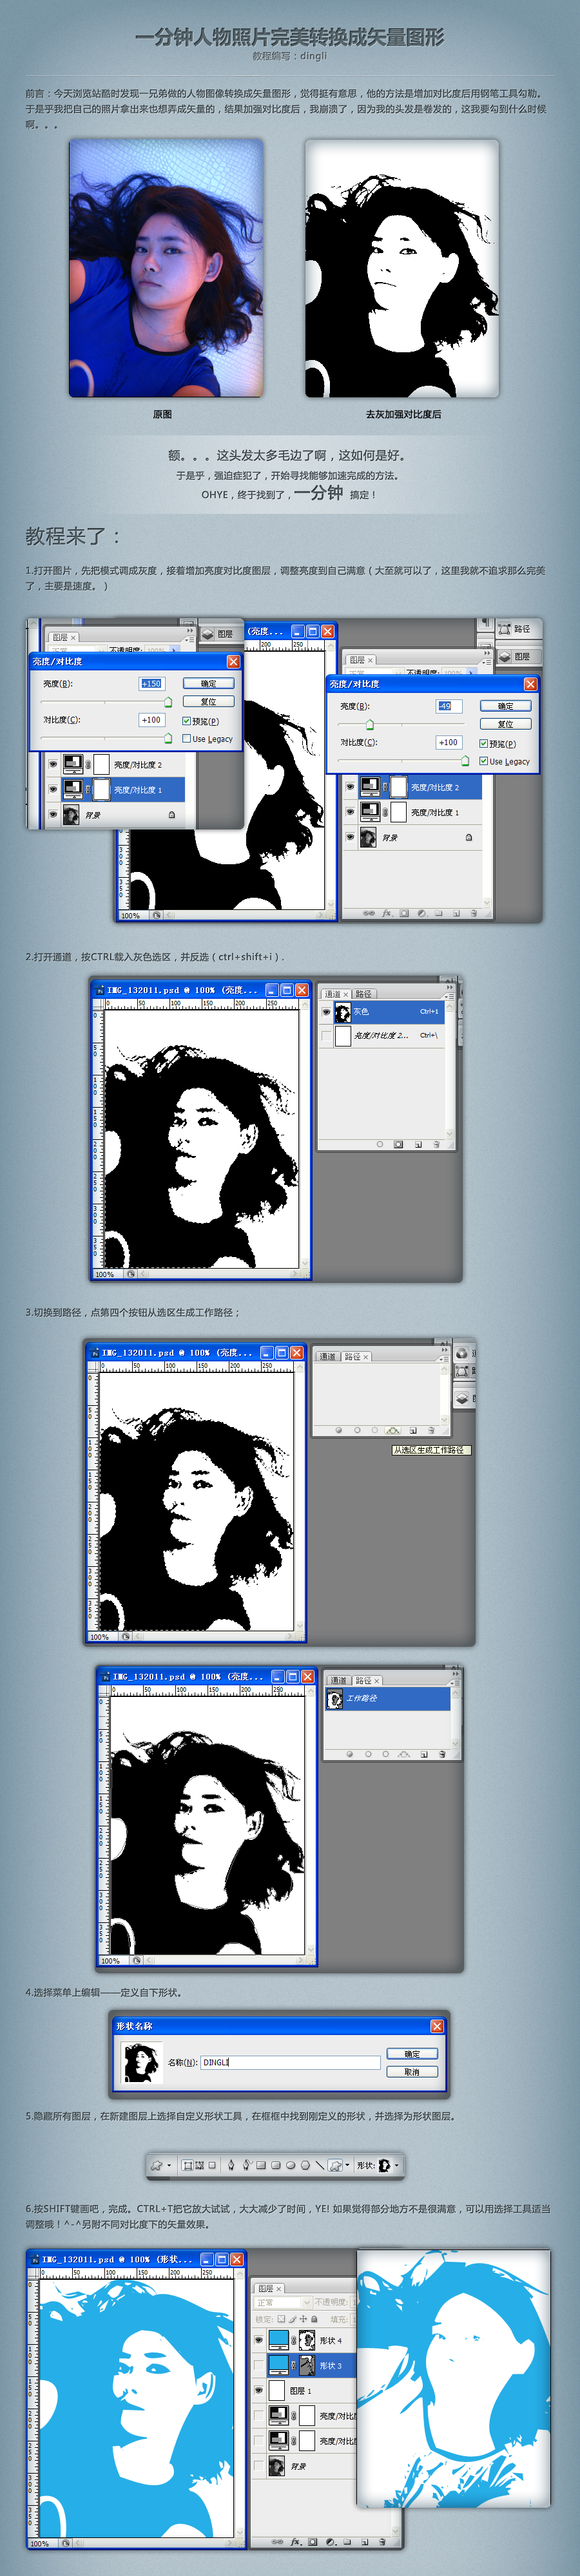 PhotoShop简单步骤处理照片成矢量效果教程2